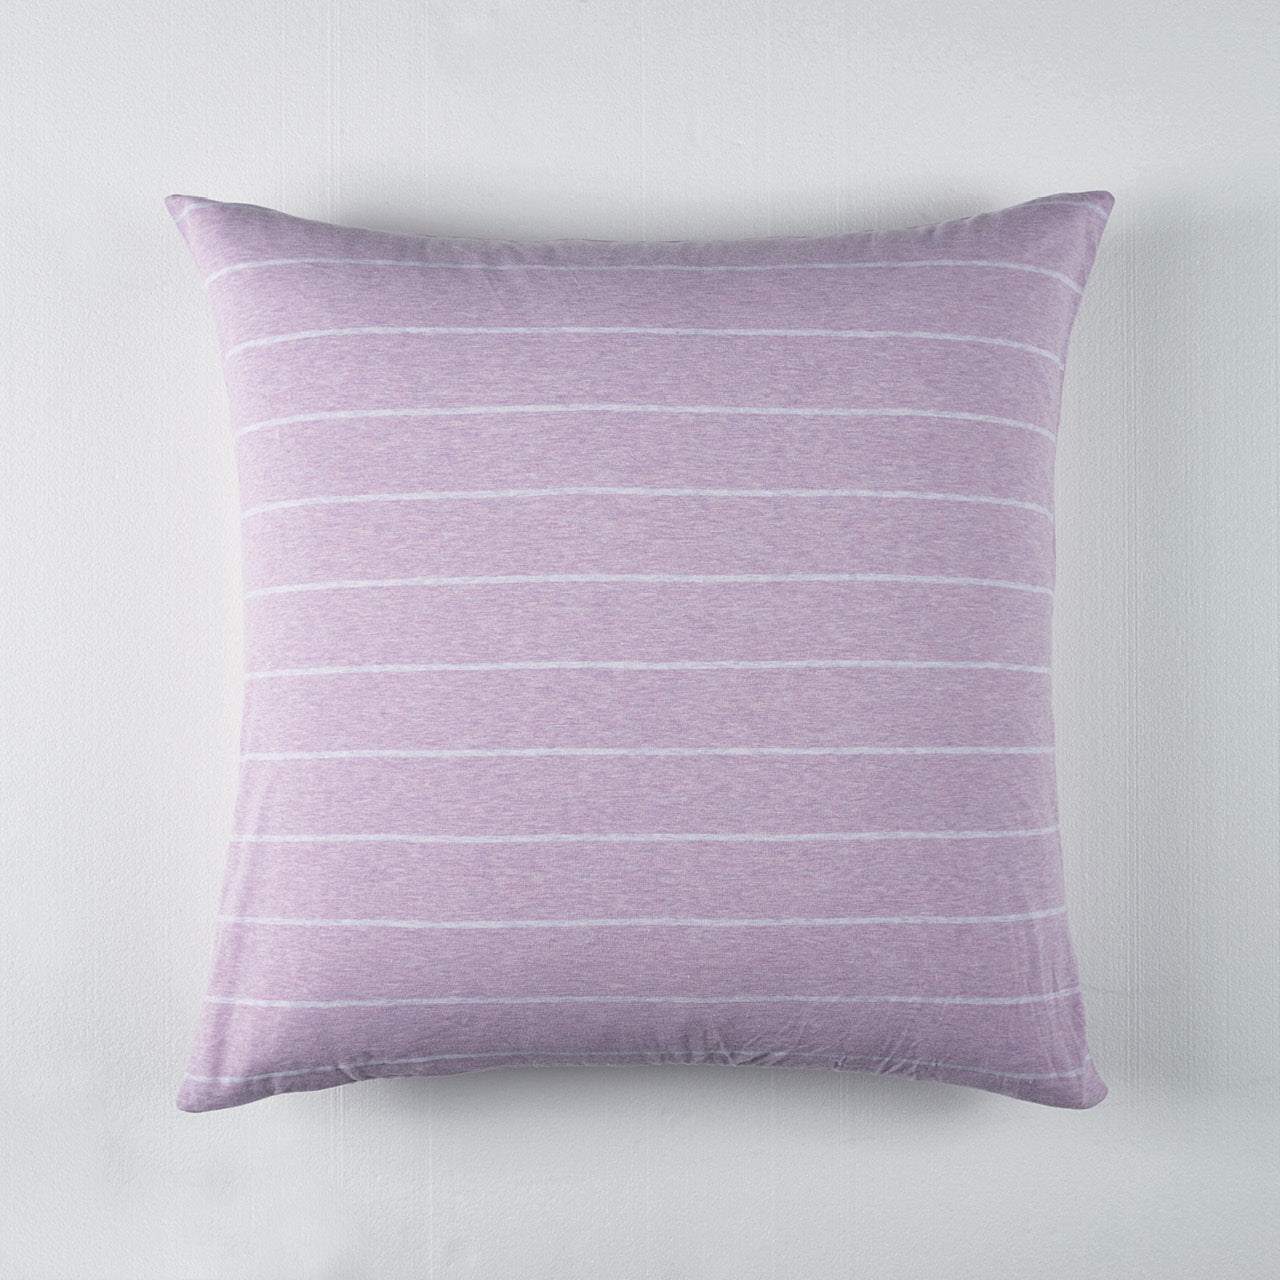 Henley Lilac European Pillowcase on a white background